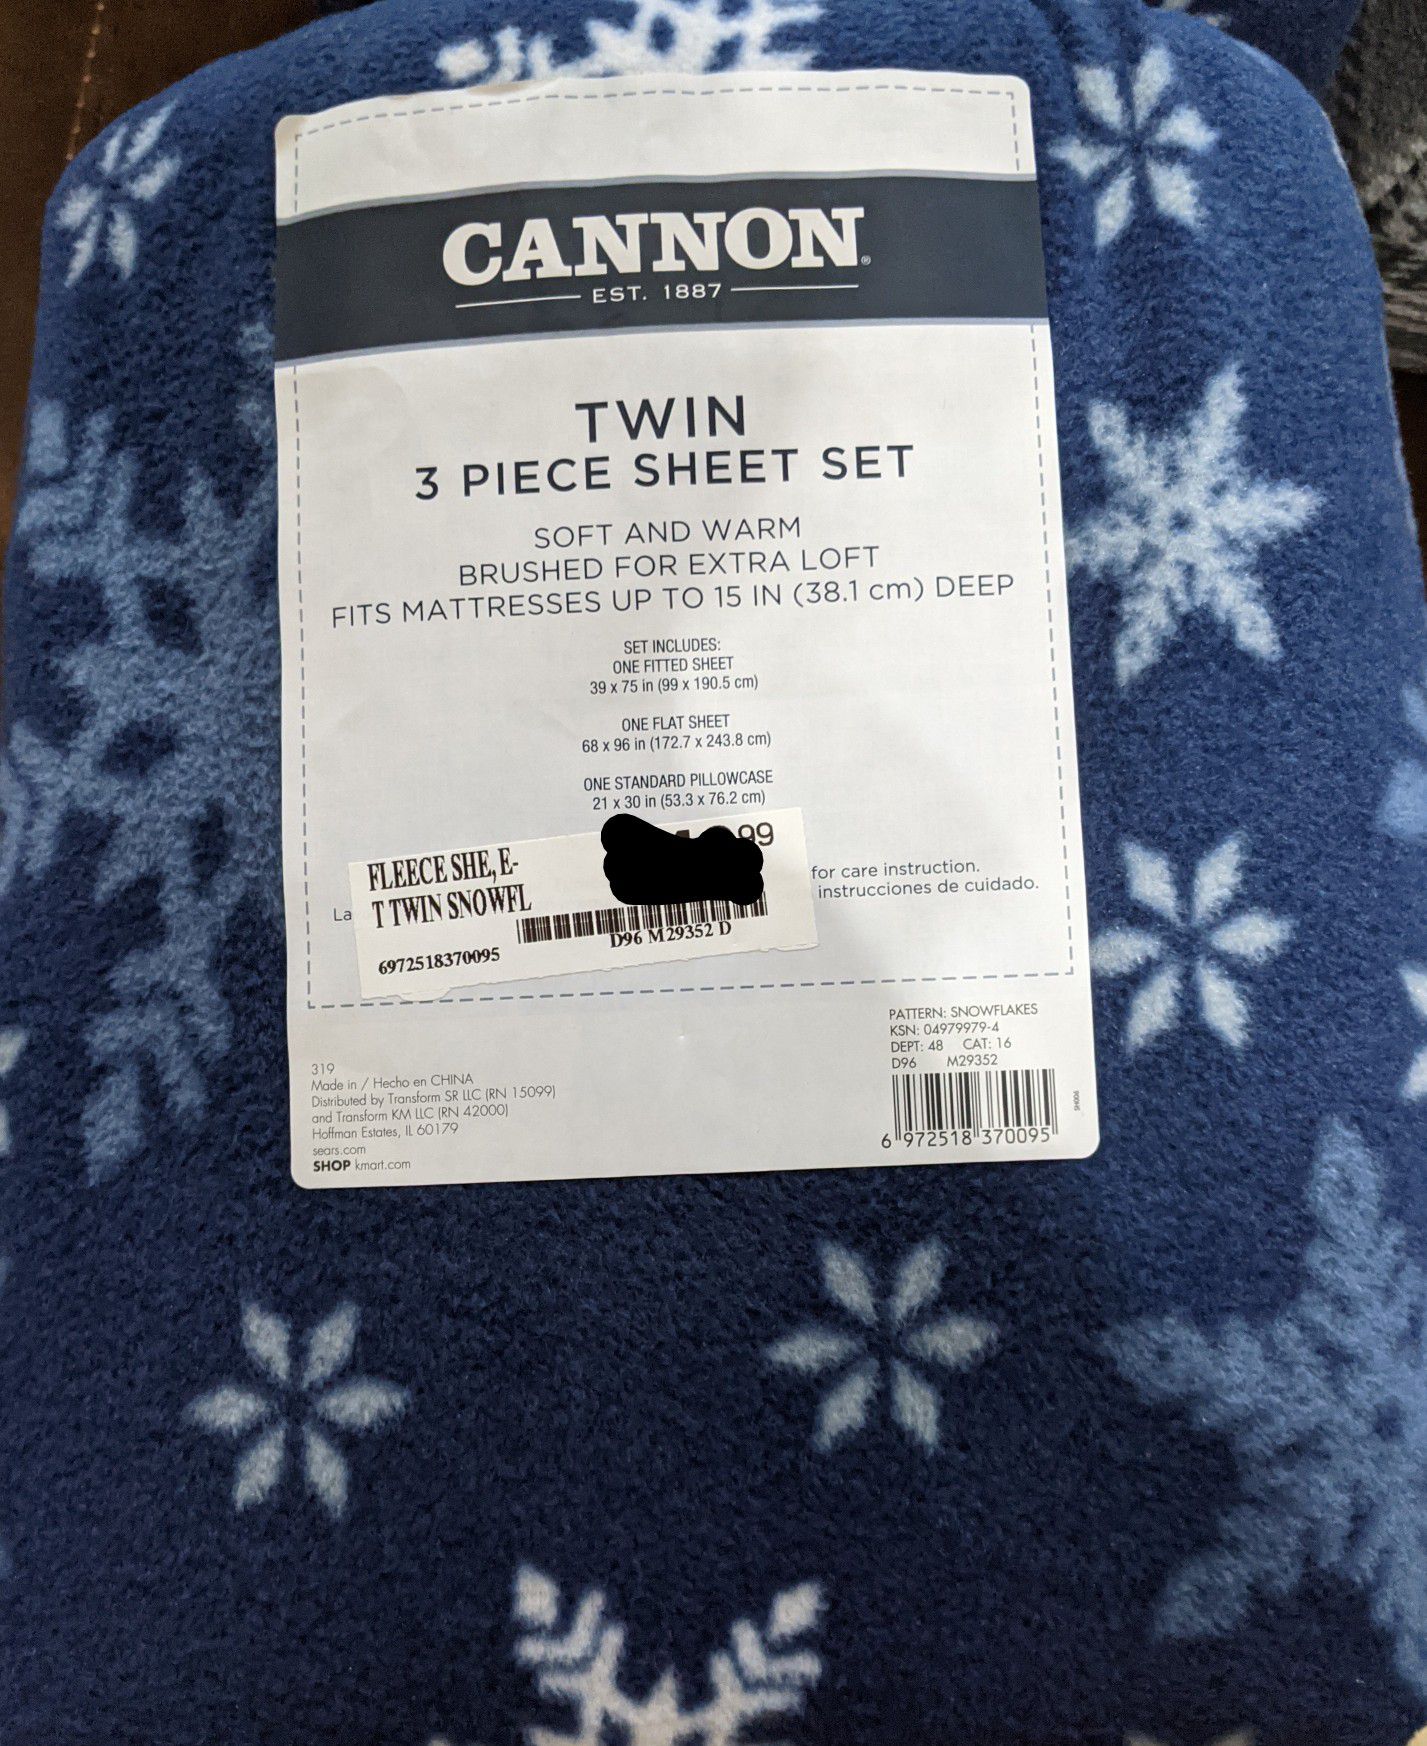 Fleece Sheets, Blankets, Pillow case.